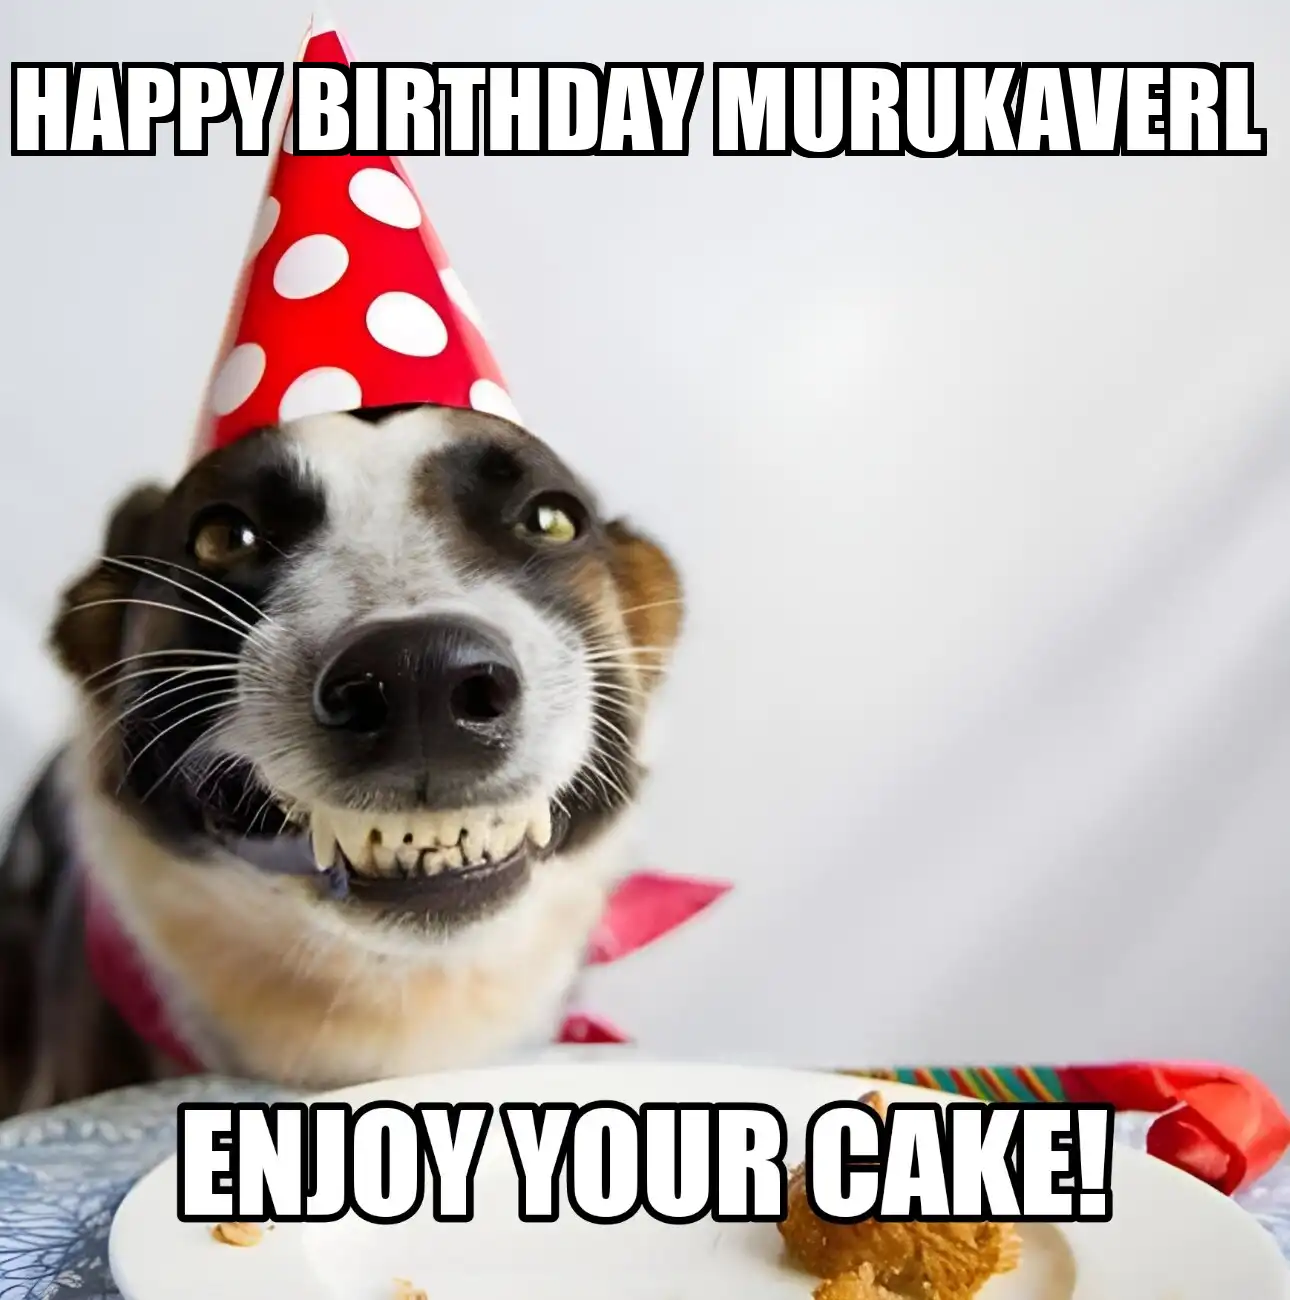 Happy Birthday Murukaverl Enjoy Your Cake Dog Meme